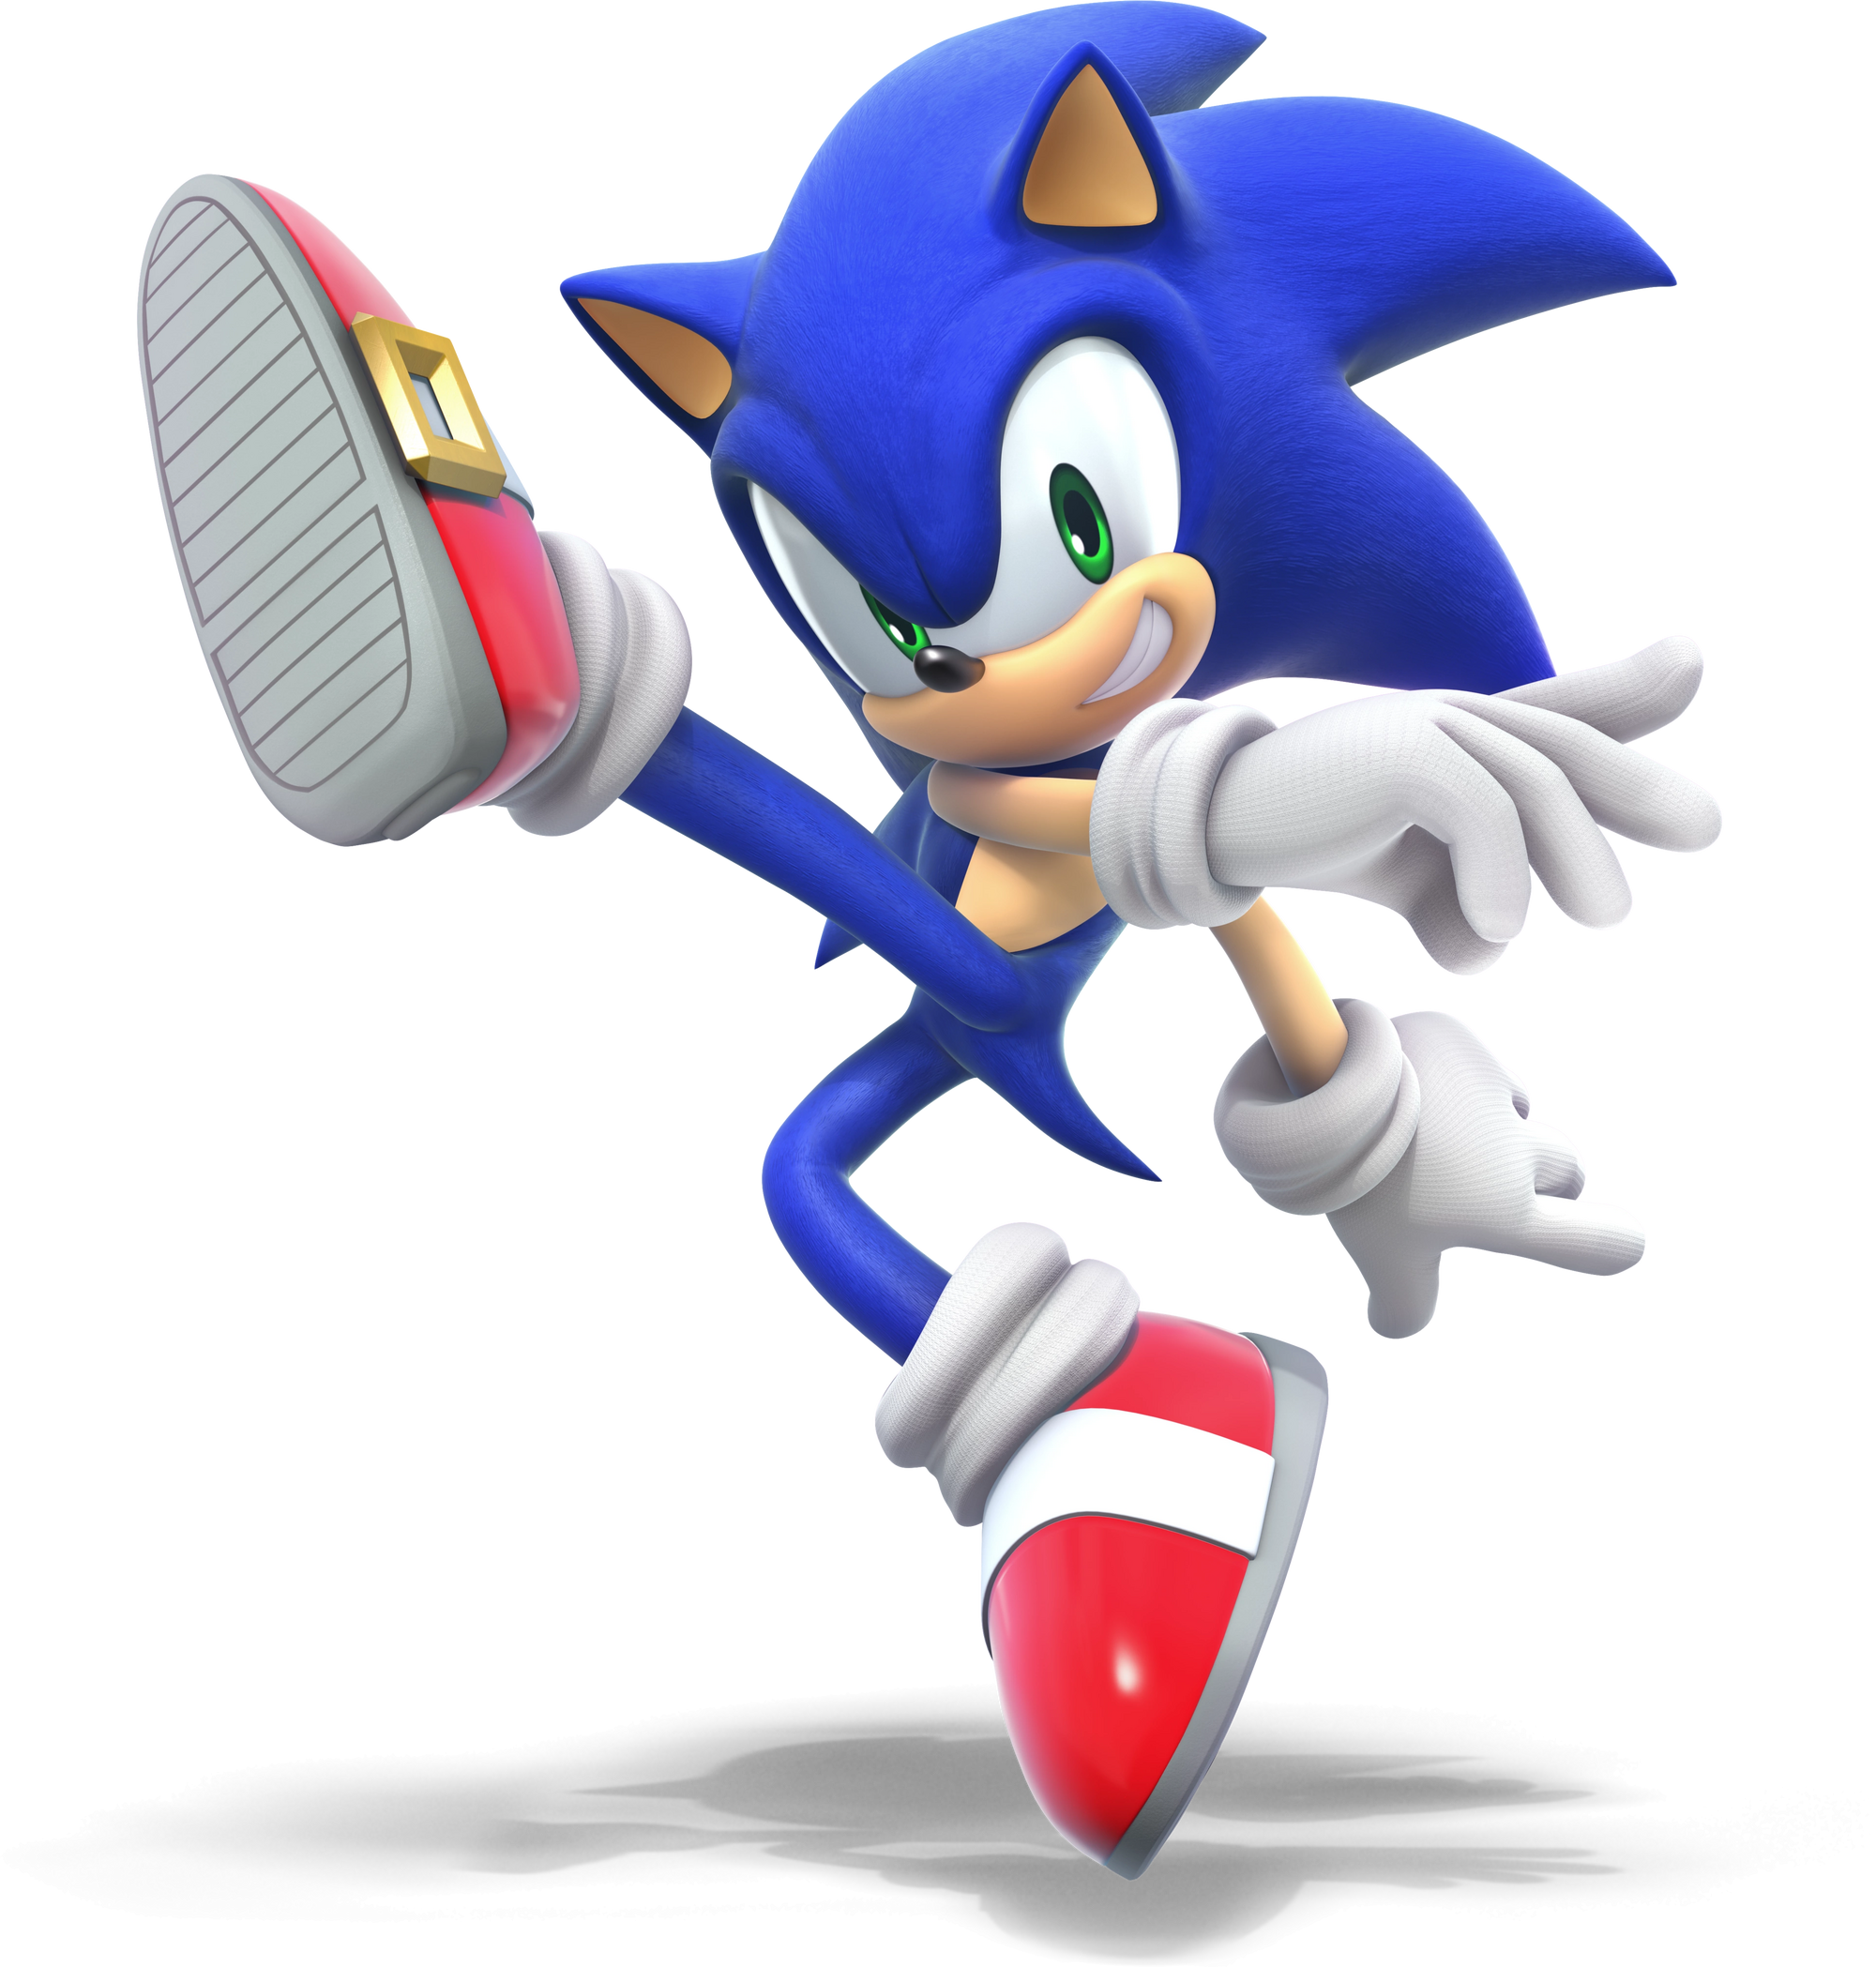 Sonic The Hedgehog Fantendo Nintendo Fanon Wiki Fandom Powered By Wikia 7561